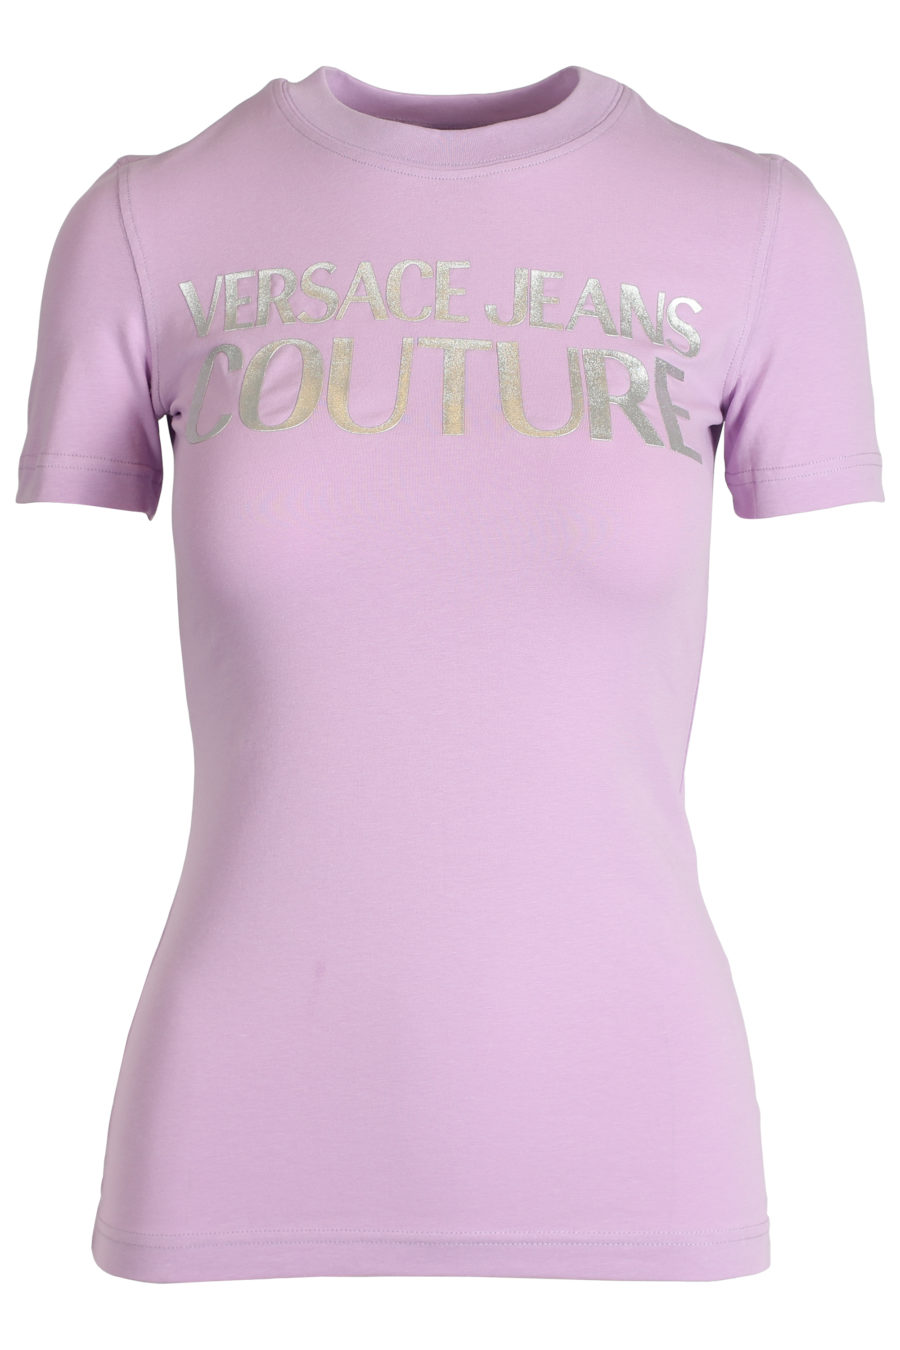 Camiseta lila con logo plateado - IMG 5475